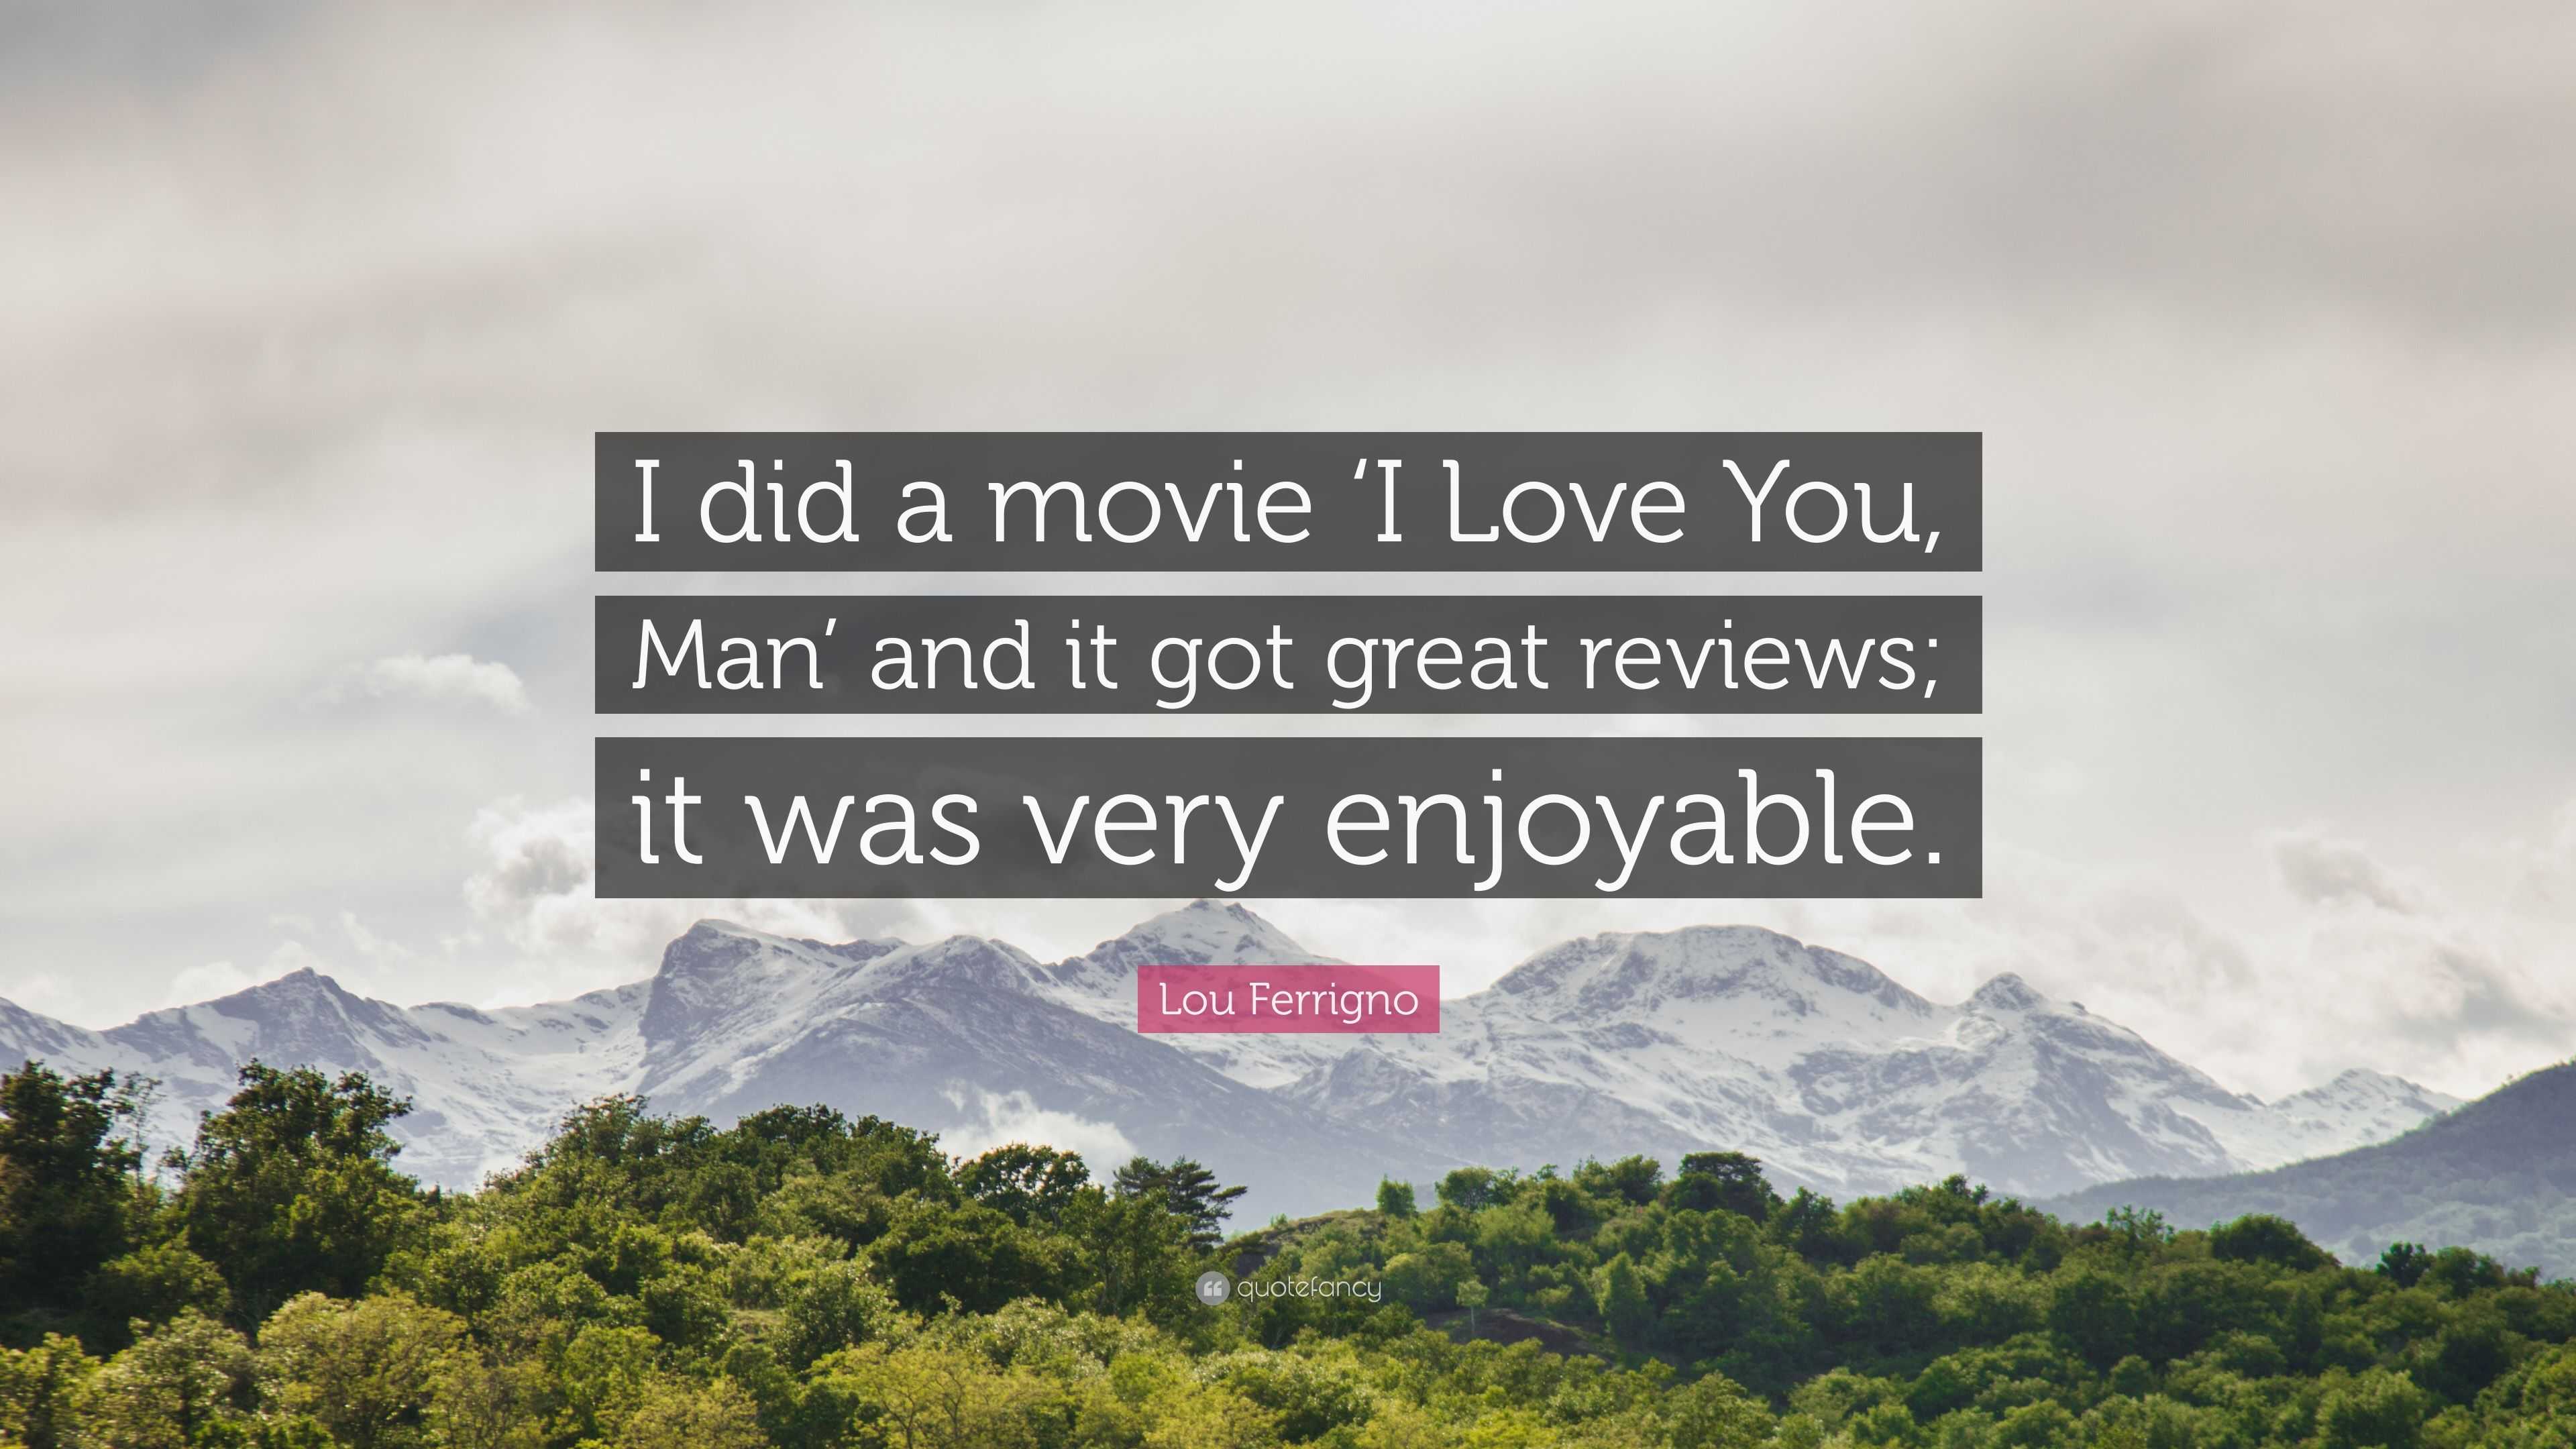 Lou Ferrigno Quote “I did a movie I Love You Man